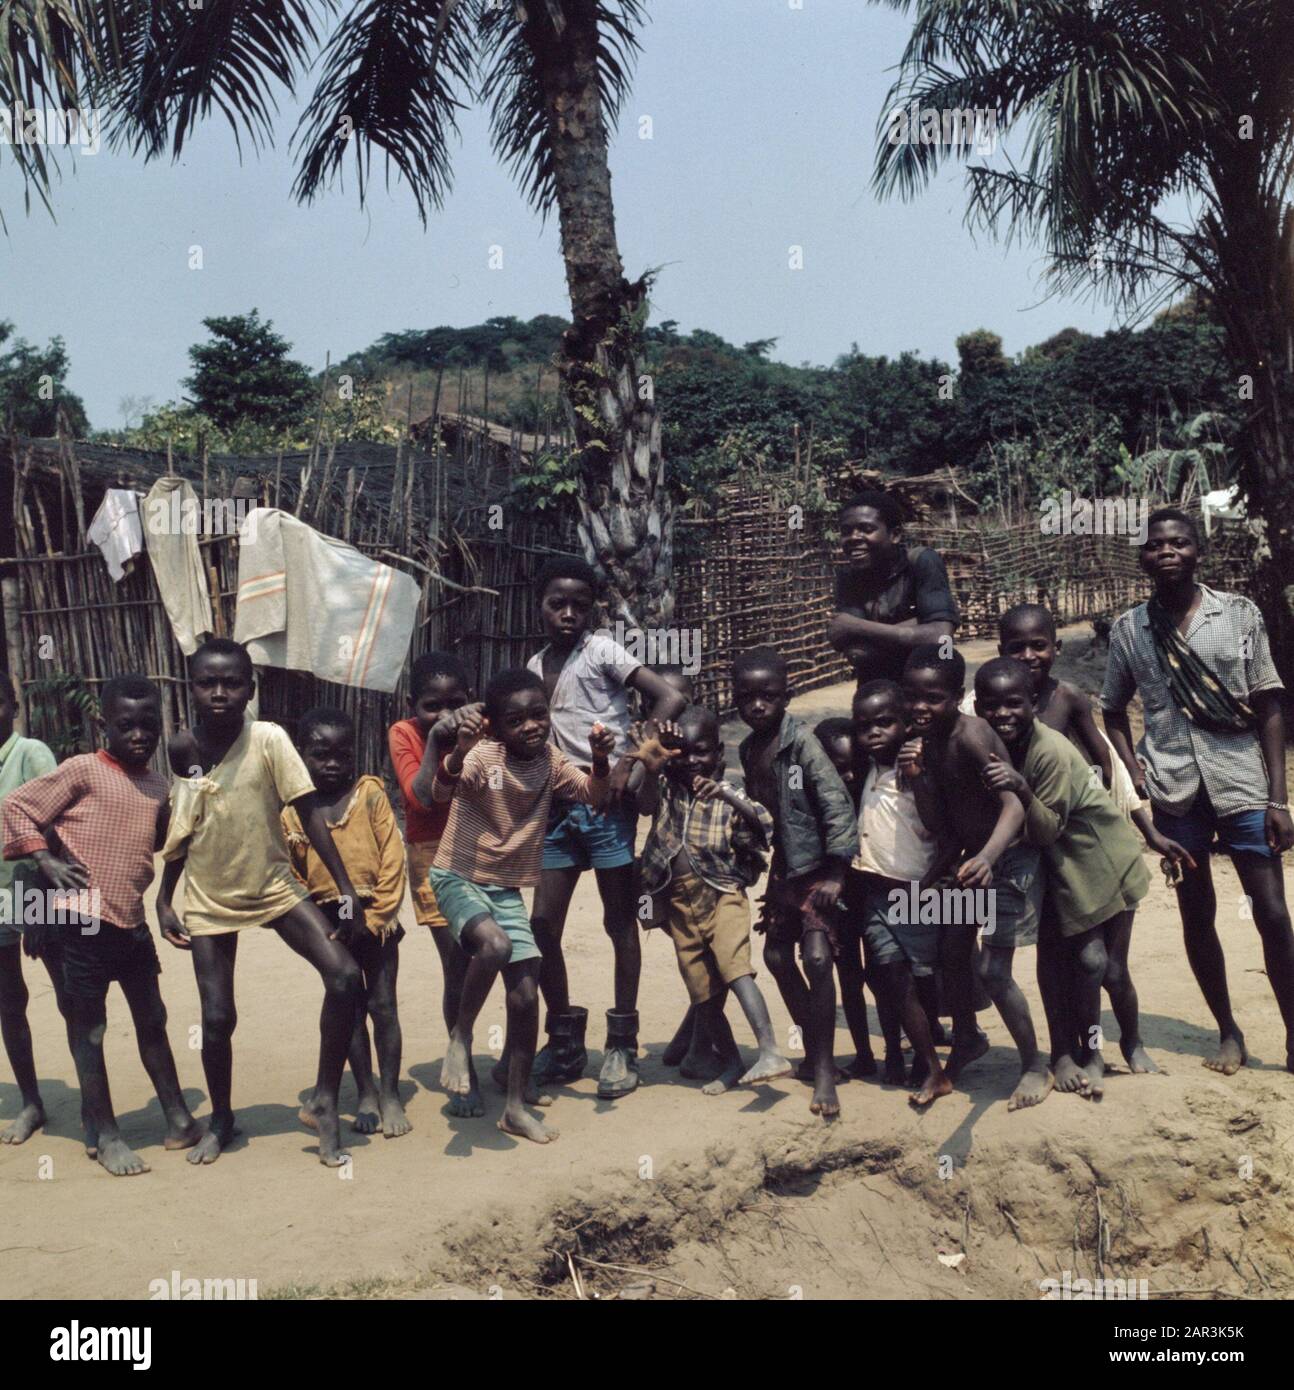 Zaire (früher Belgisch-Kongo); Lager für angolanische Flüchtlinge in Zaire Datum: 16. August 1973 Ort: Belgisch-Kongo, Zaire Schlüsselwörter: REGUIDE Stockfoto